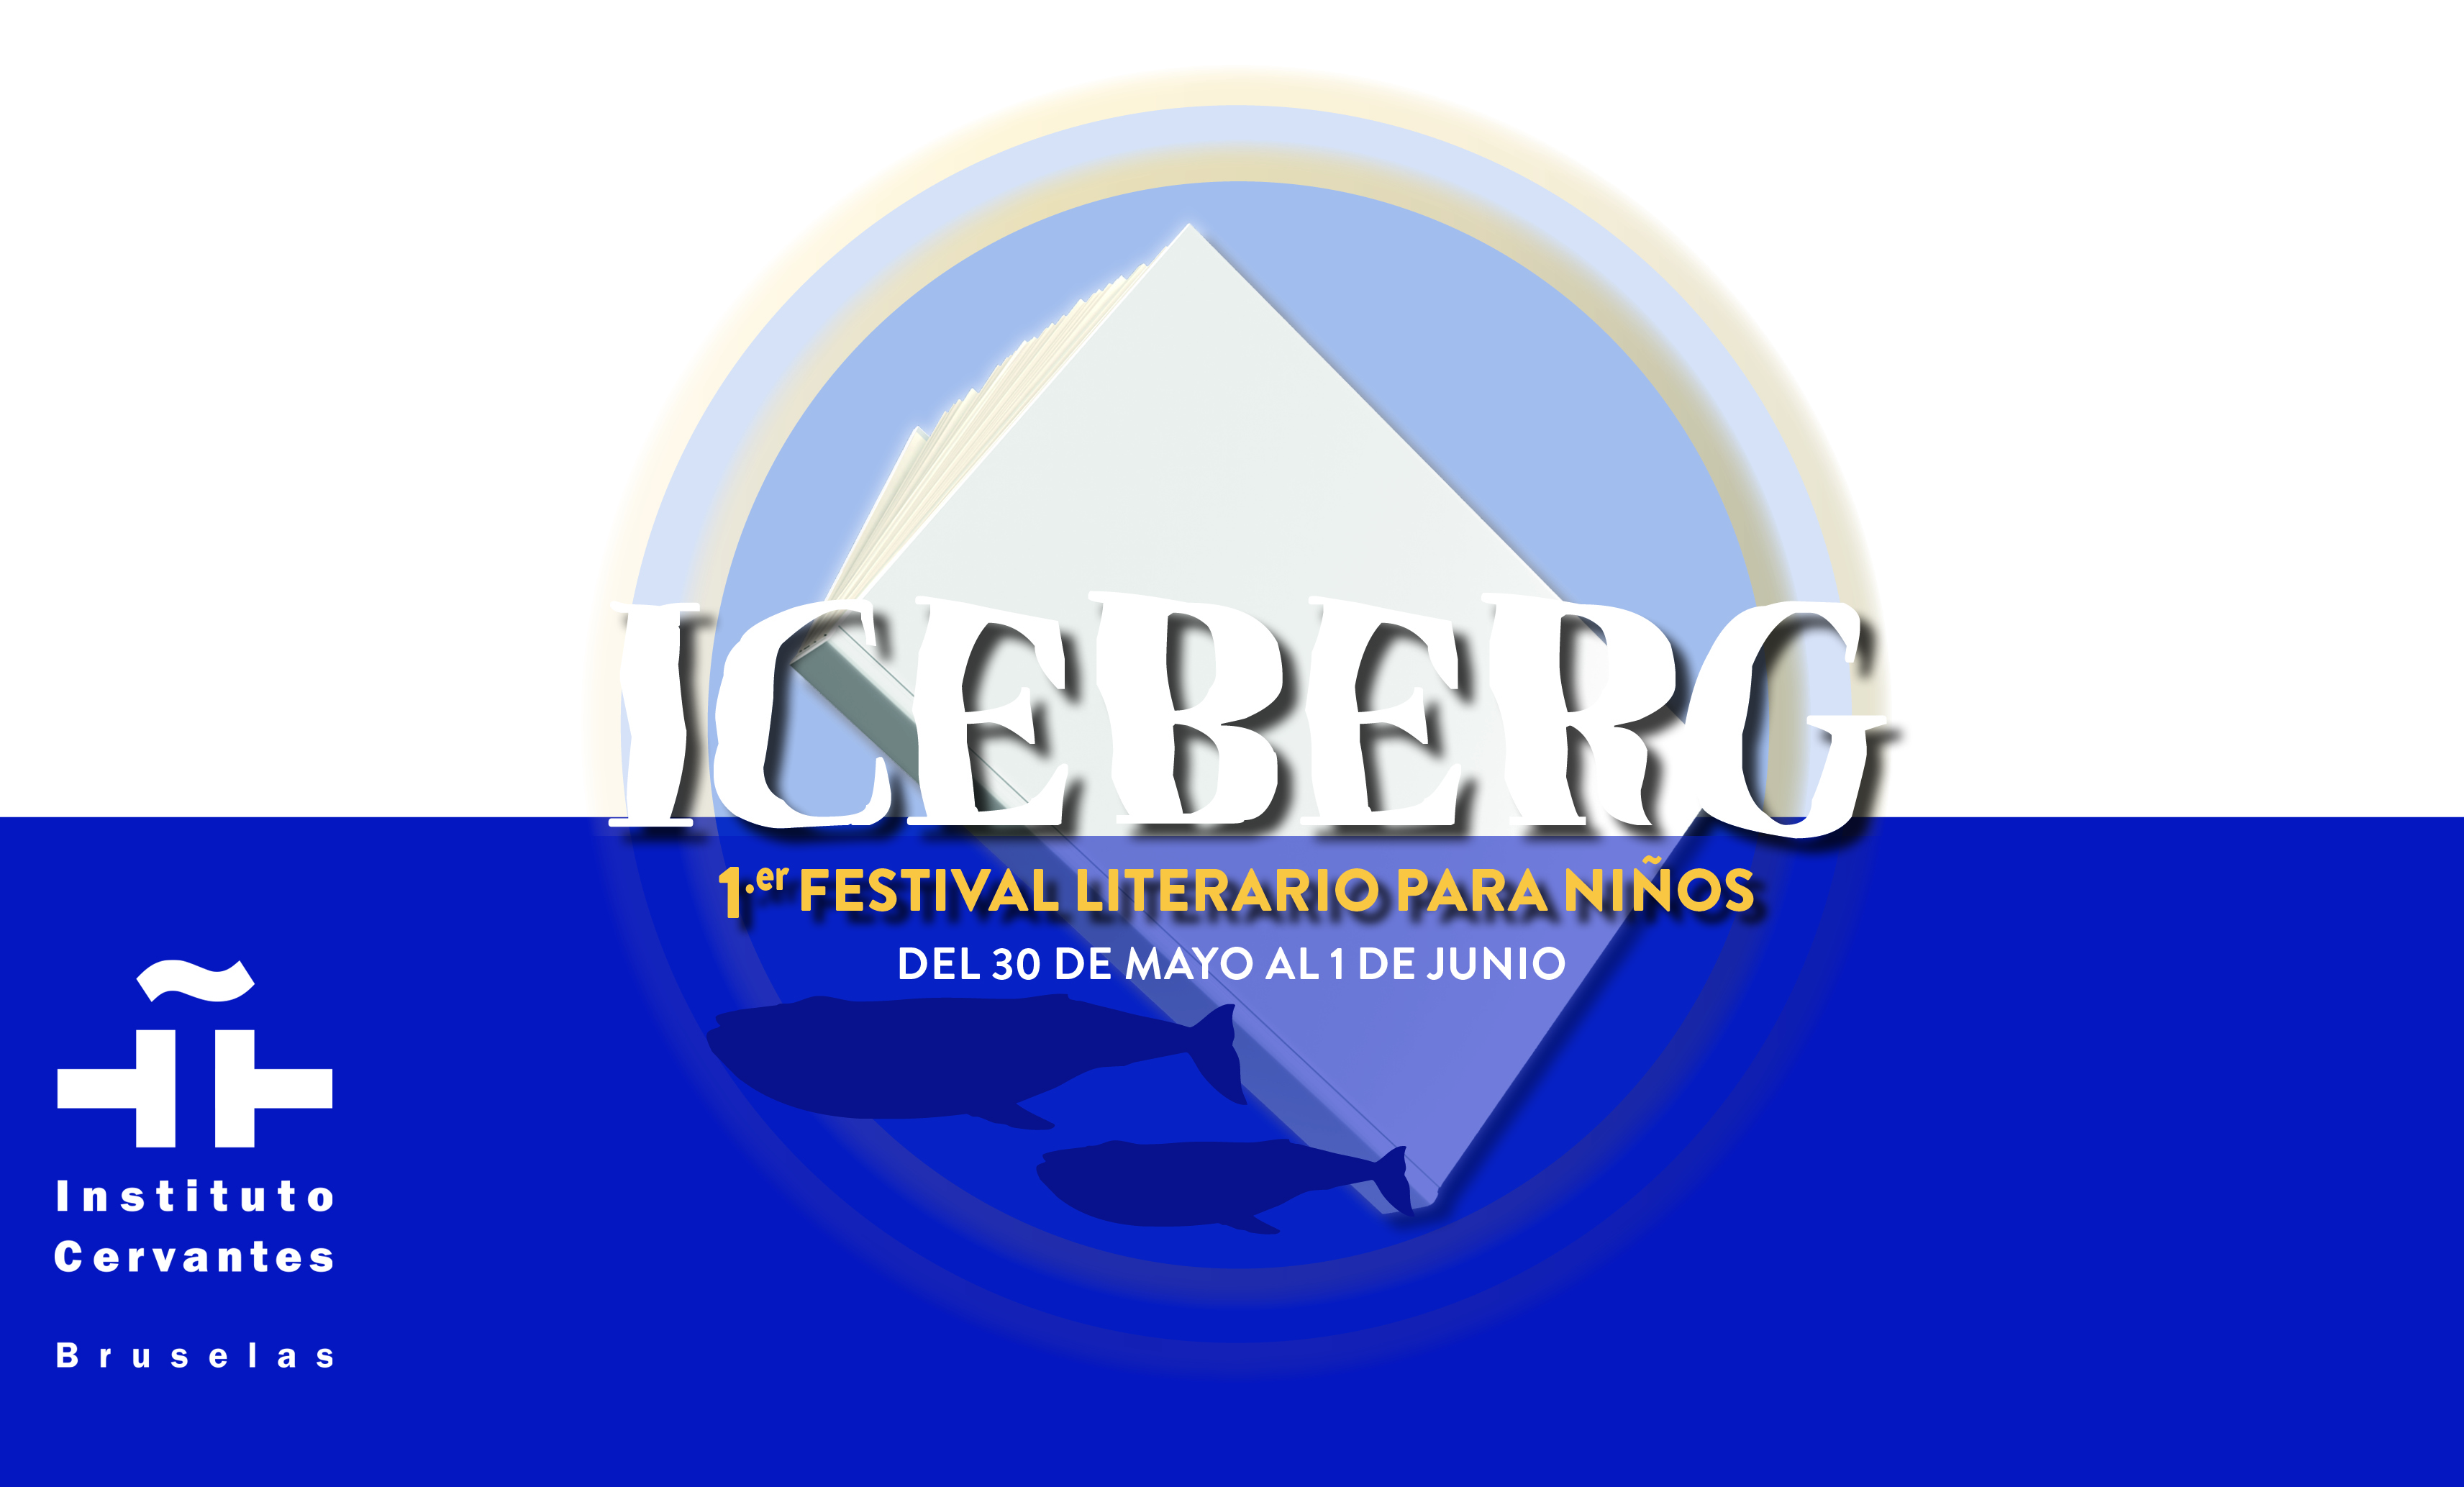 Iceberg: festival literario para niños